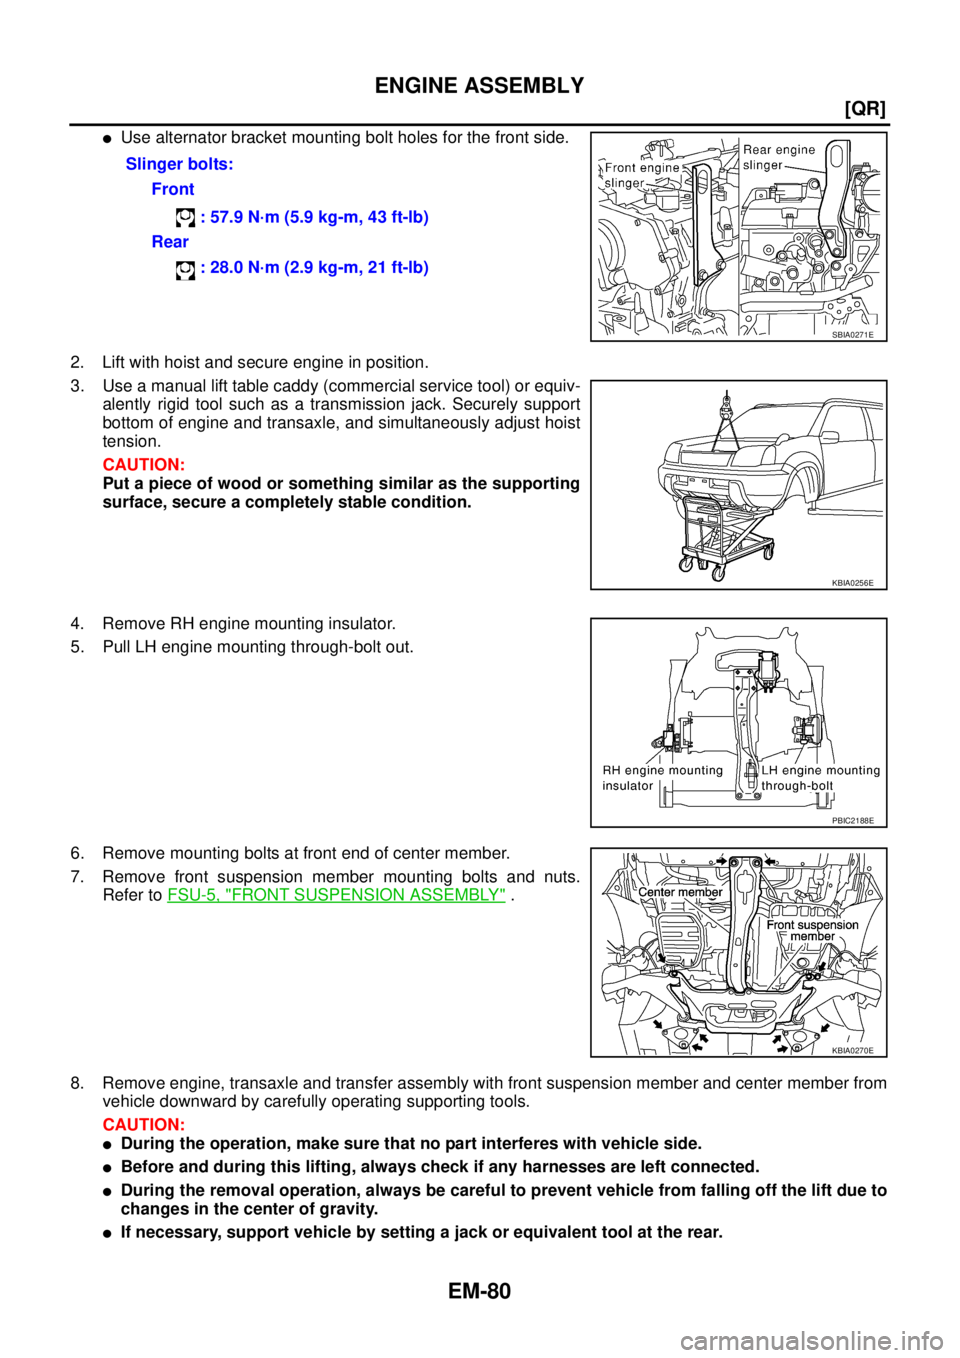 NISSAN X-TRAIL 2003  Service Repair Manual EM-80
[QR]
ENGINE ASSEMBLY
 
Use alternator bracket mounting bolt holes for the front side.
2. Lift with hoist and secure engine in position.
3. Use a manual lift table caddy (commercial service tool